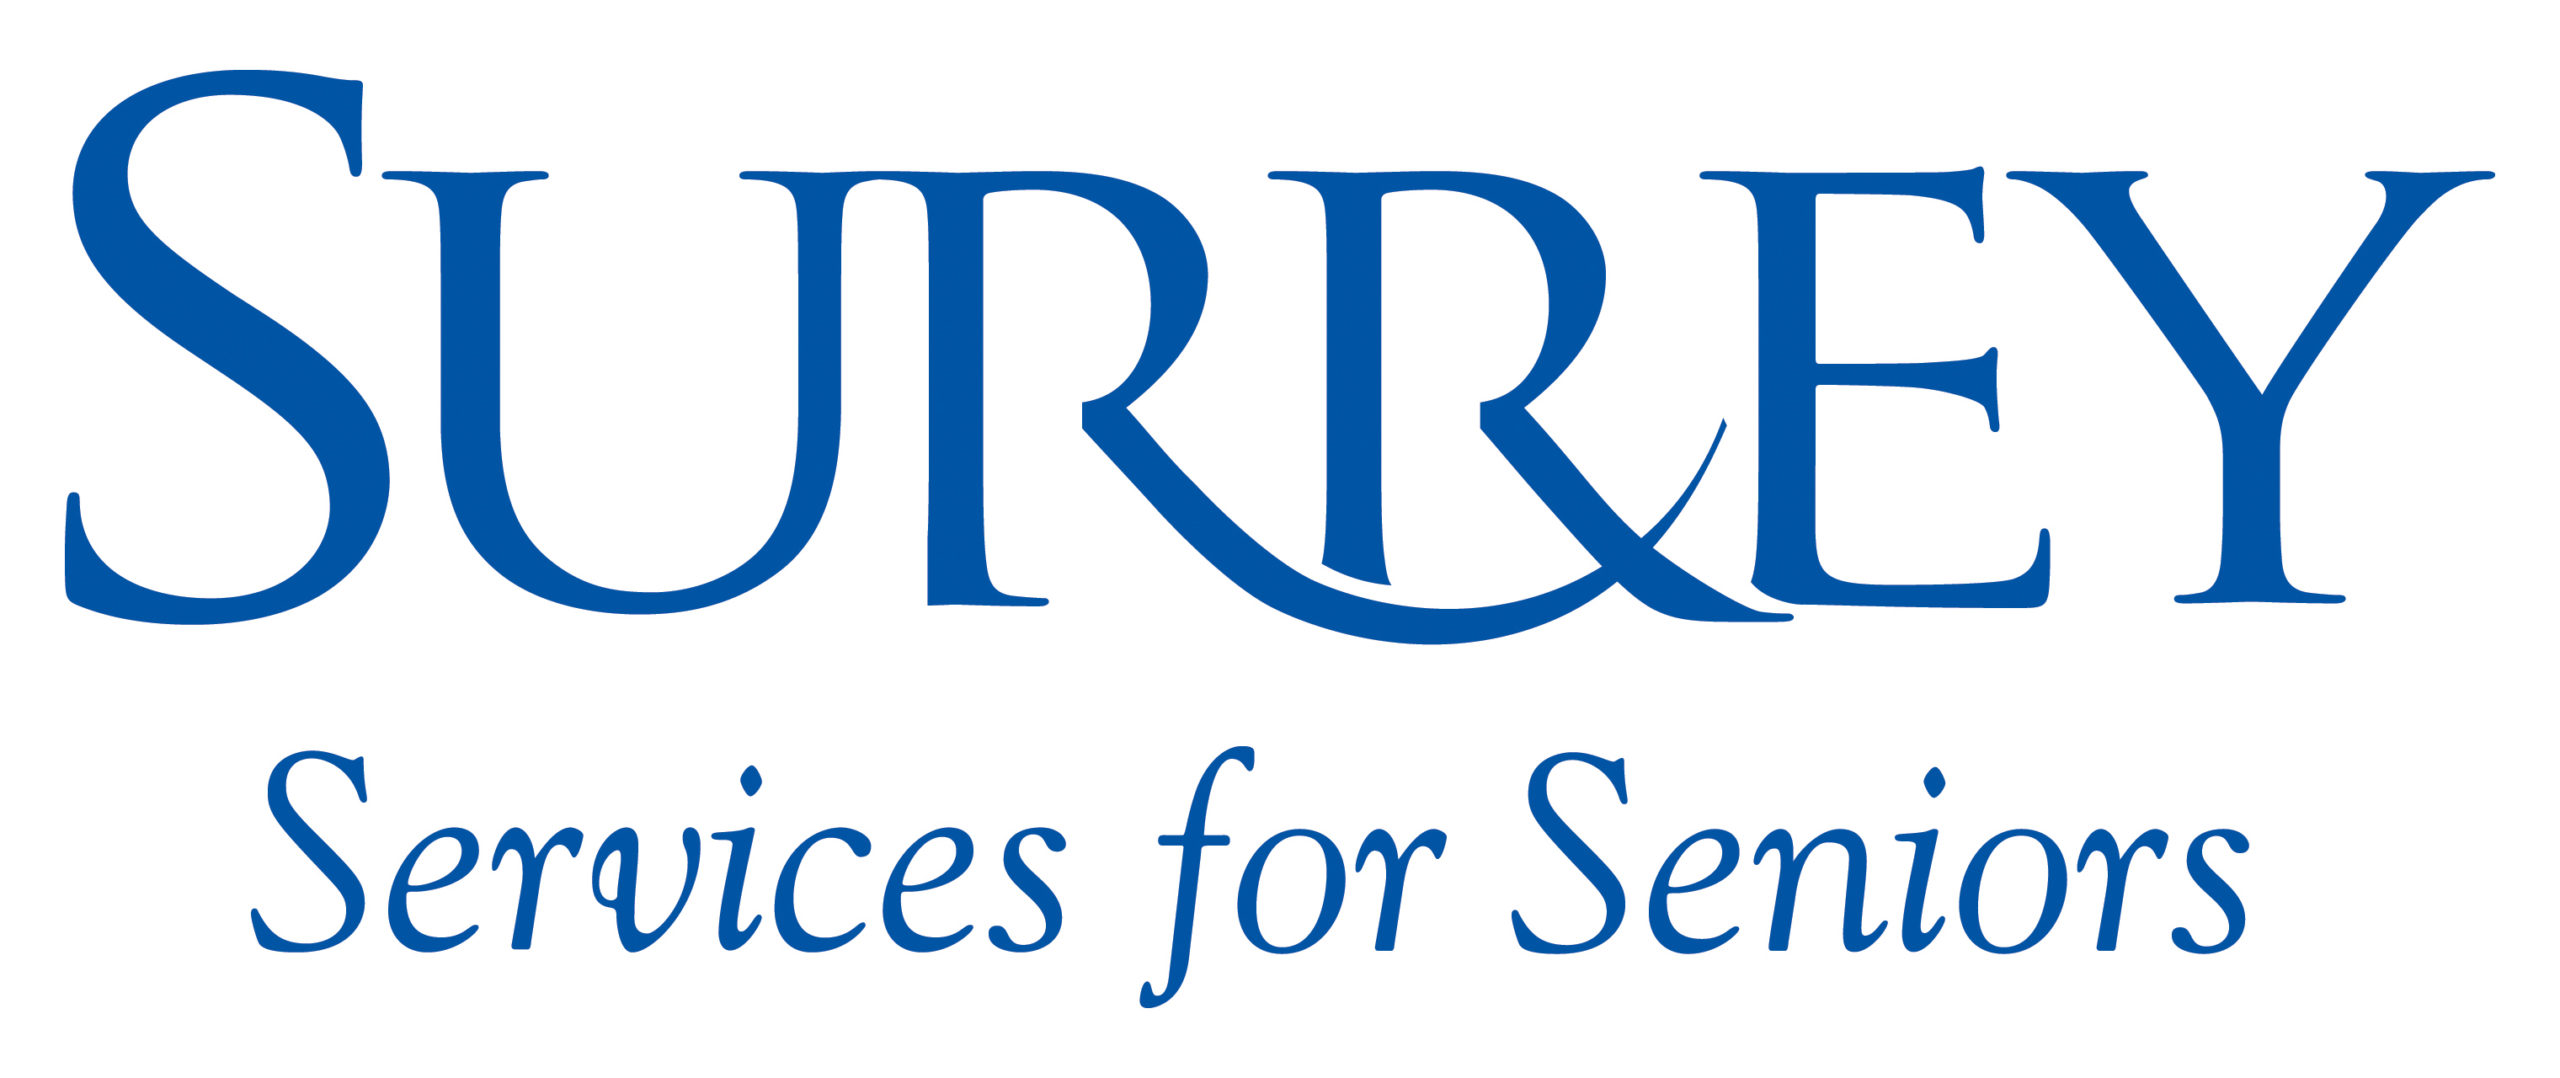 https://surreyservices.org/wp-content/uploads/2020/05/Surrey-logo-scaled.jpg